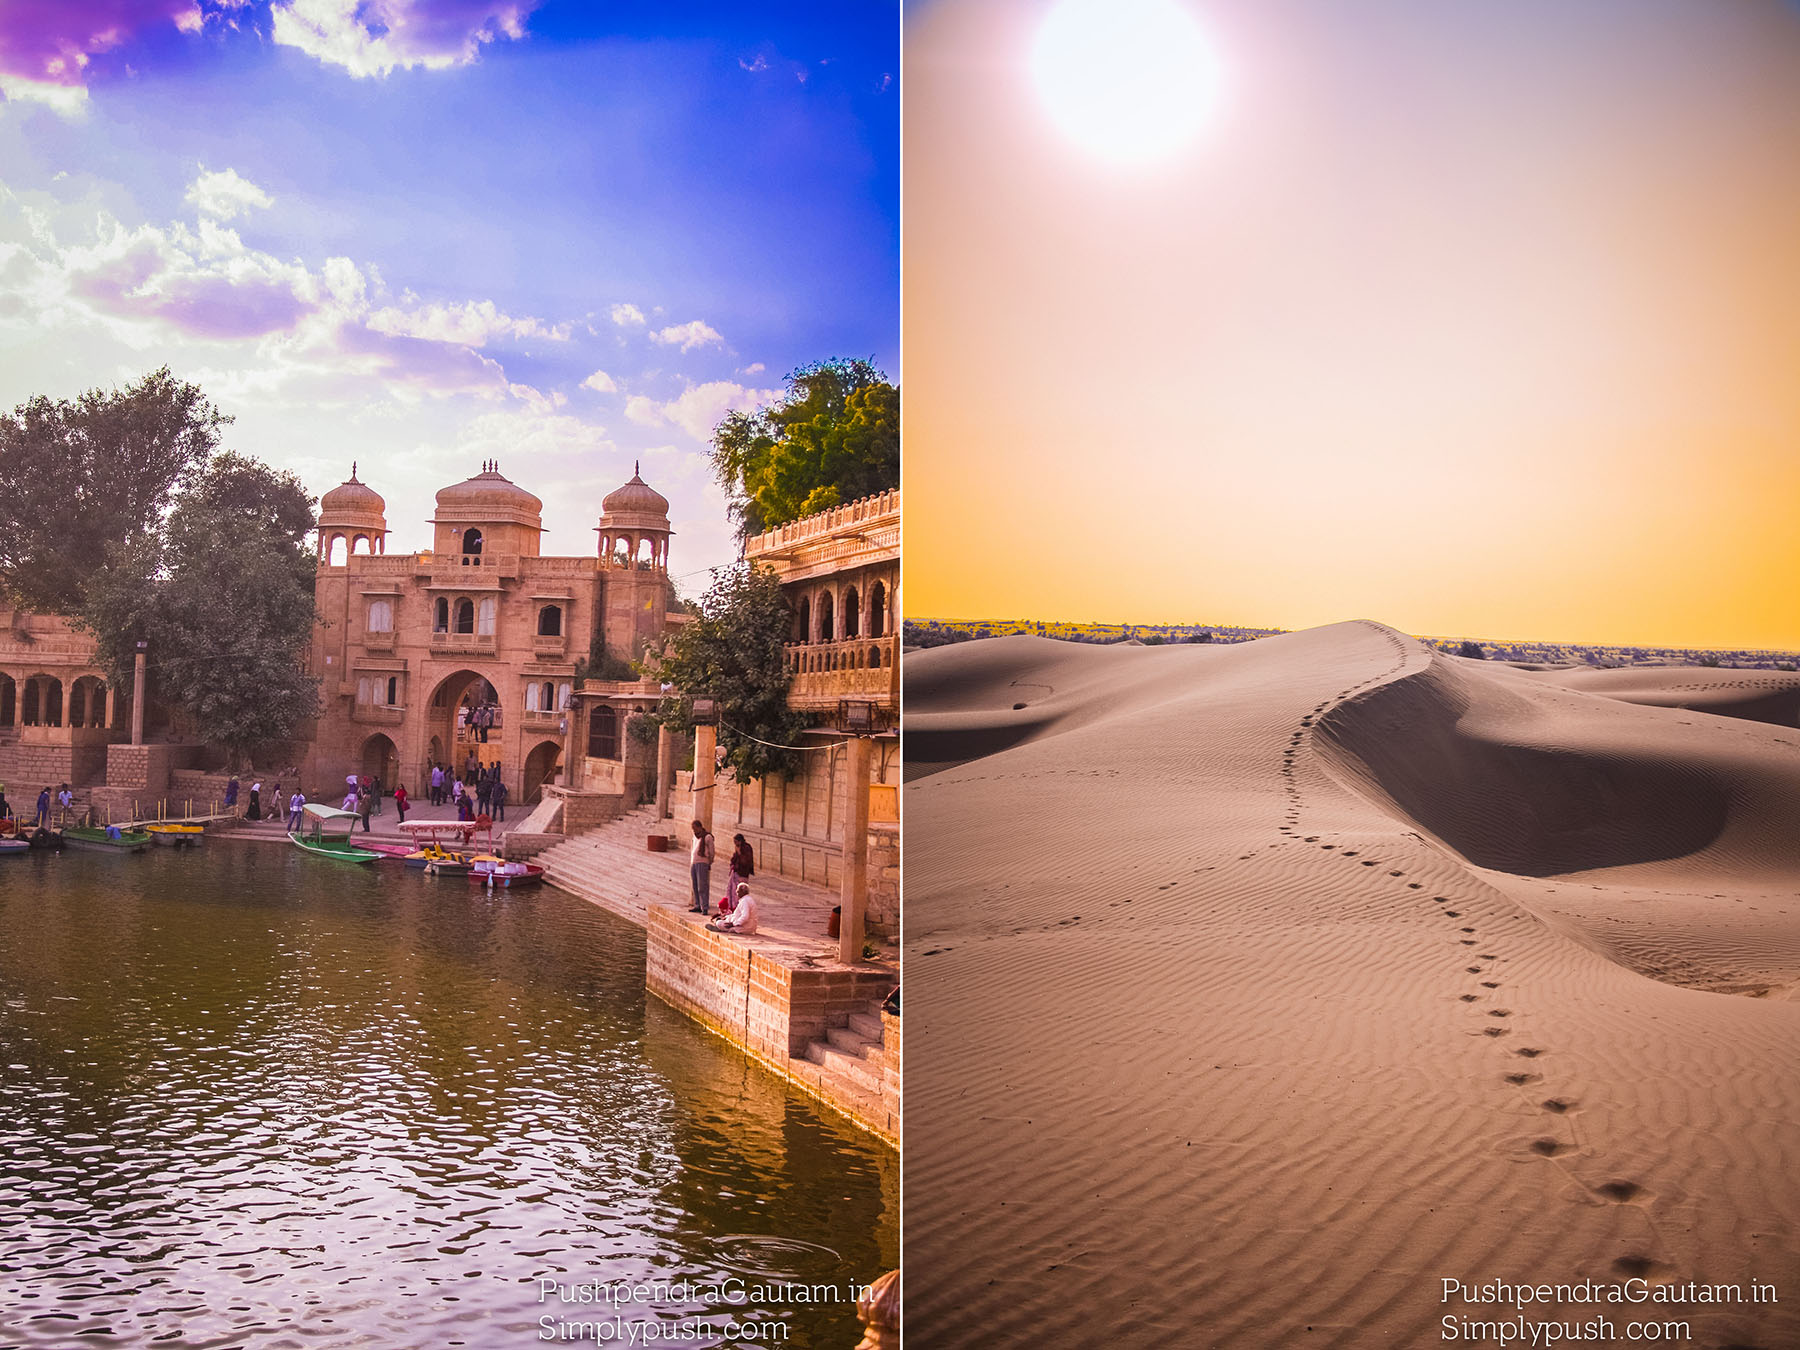 Jaisalmer-rajasthan-desert-lake-pics-idnia-the-great-indian-desert-pics-best-travel-photographer-pushpendragautam-pics-india